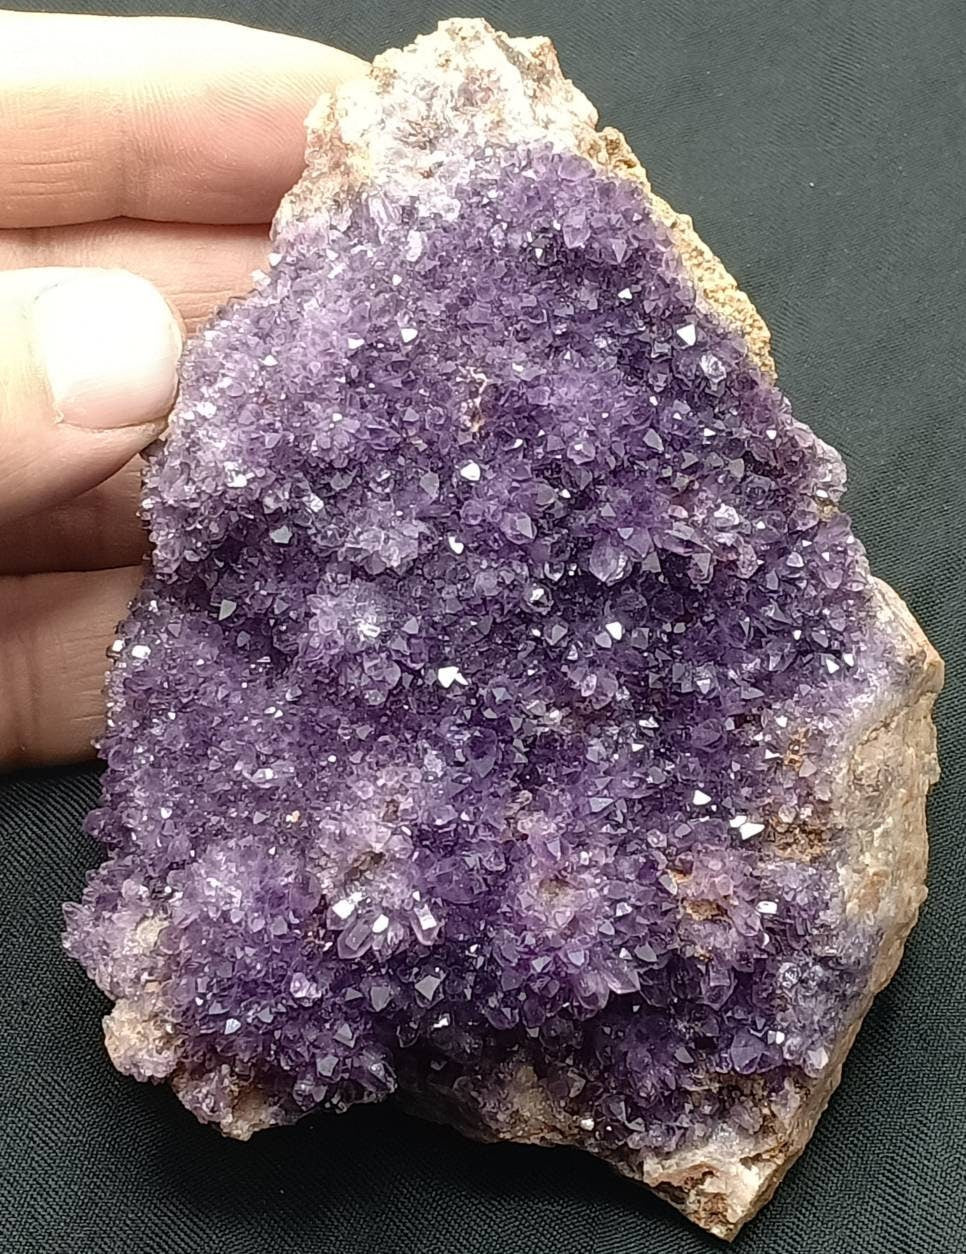 Single Beautiful Amethyst Drusy crystals Cluster